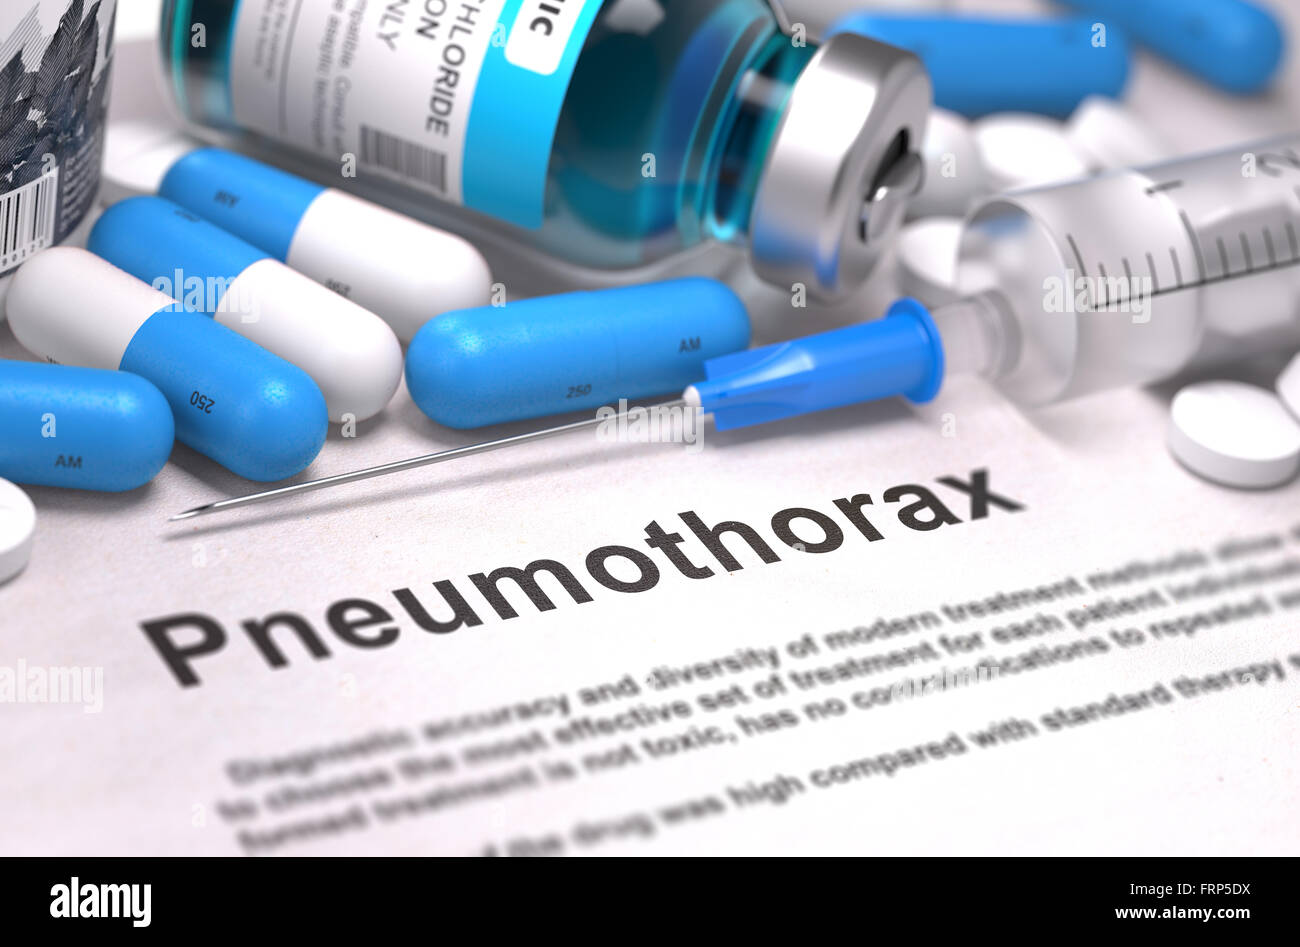 Diagnosis - Pneumothorax. Medical Concept. Stock Photo